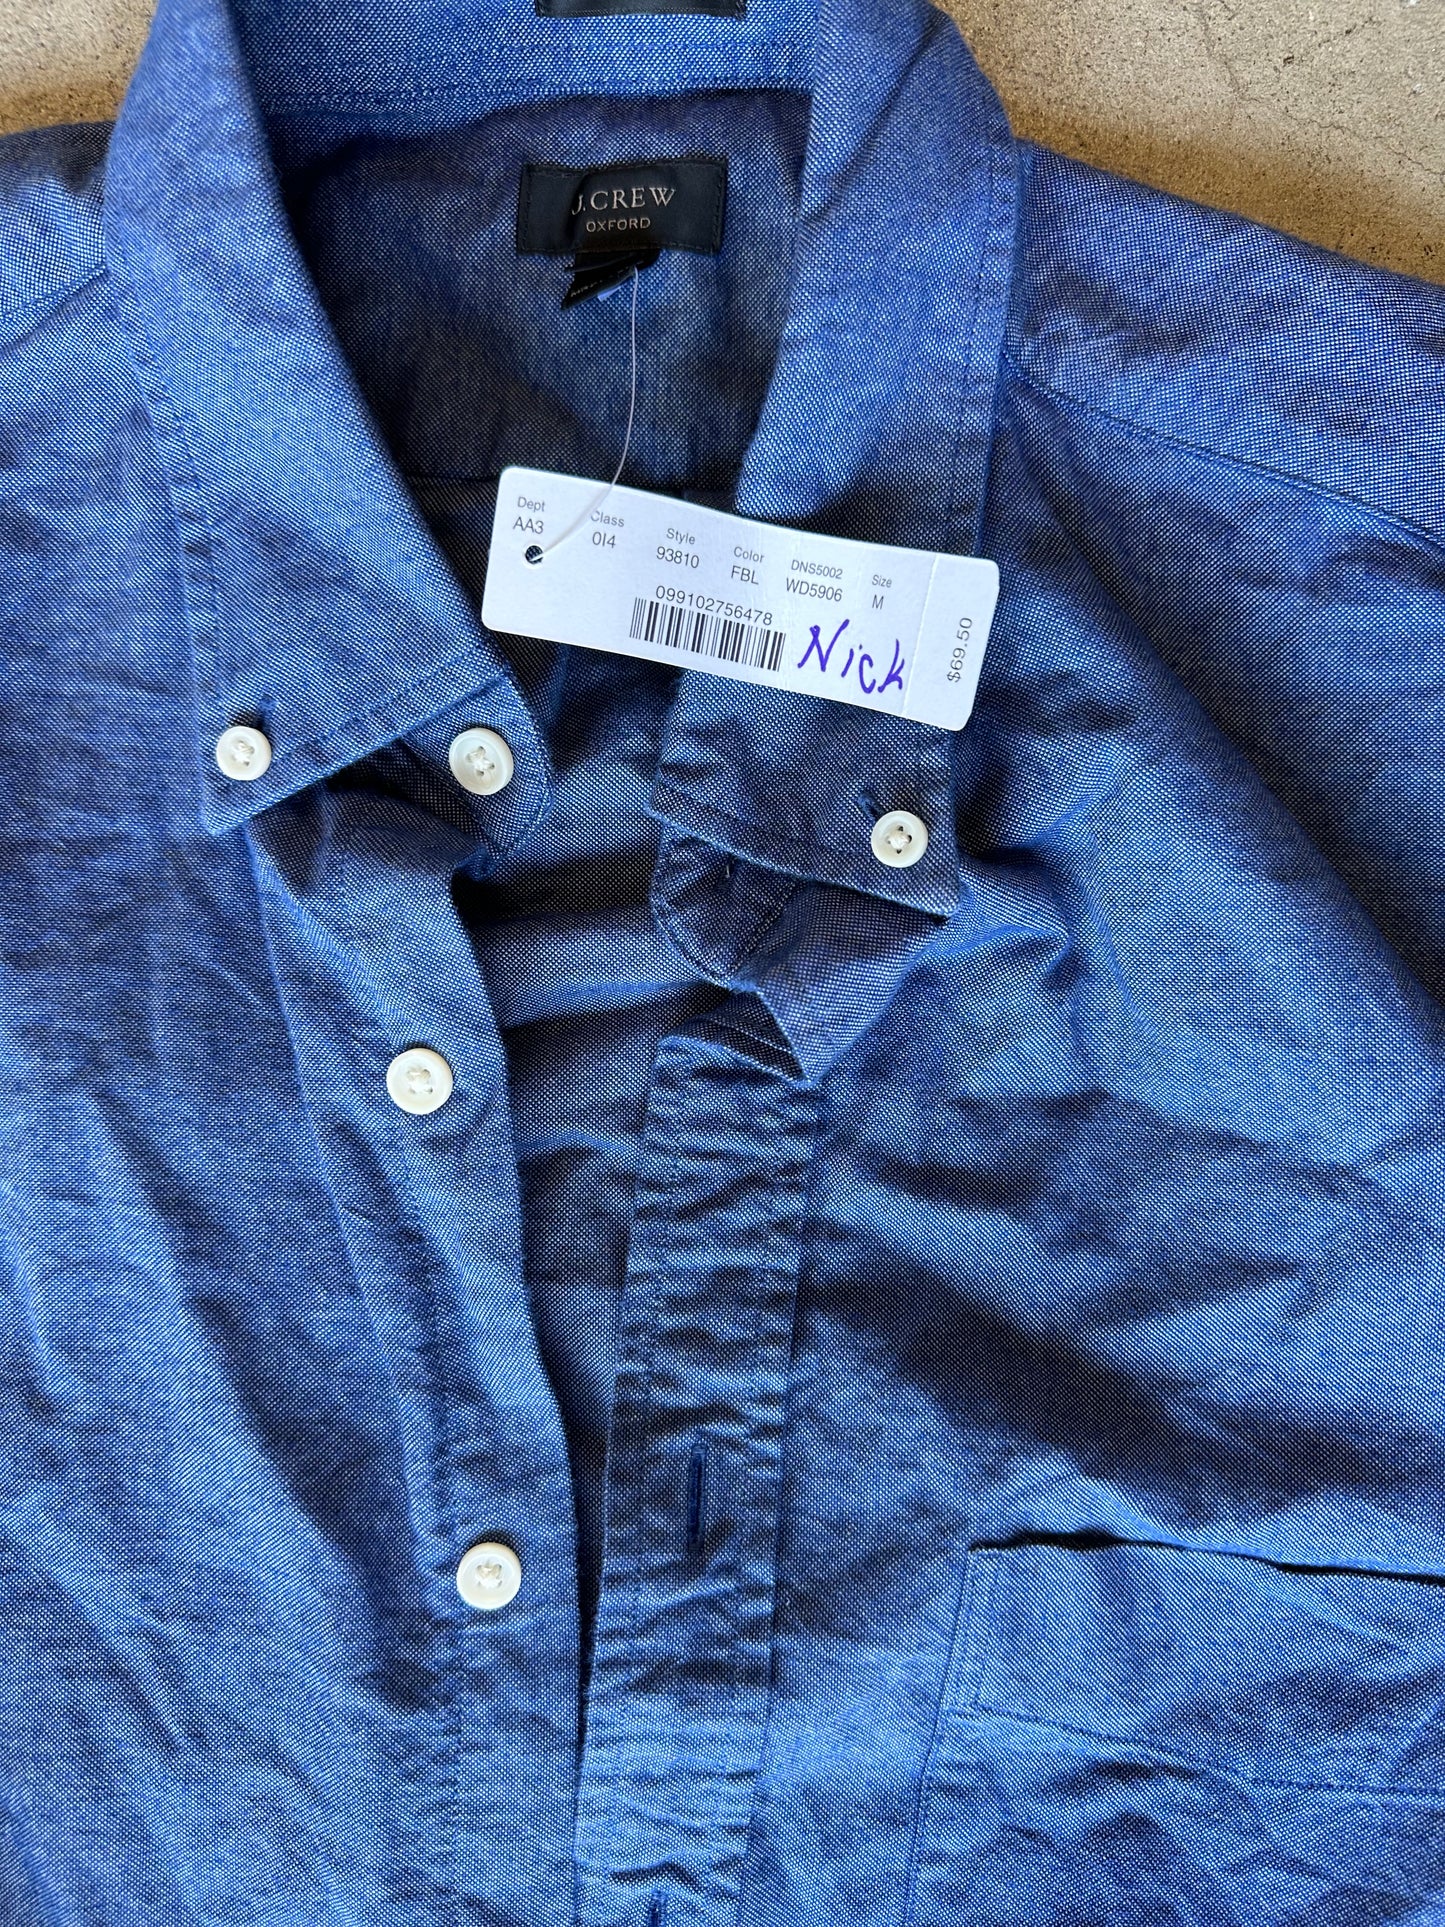 NEW GIRL: Nick's J Crew Blue Long Sleeve Denim Style Button Down Shirt (M)